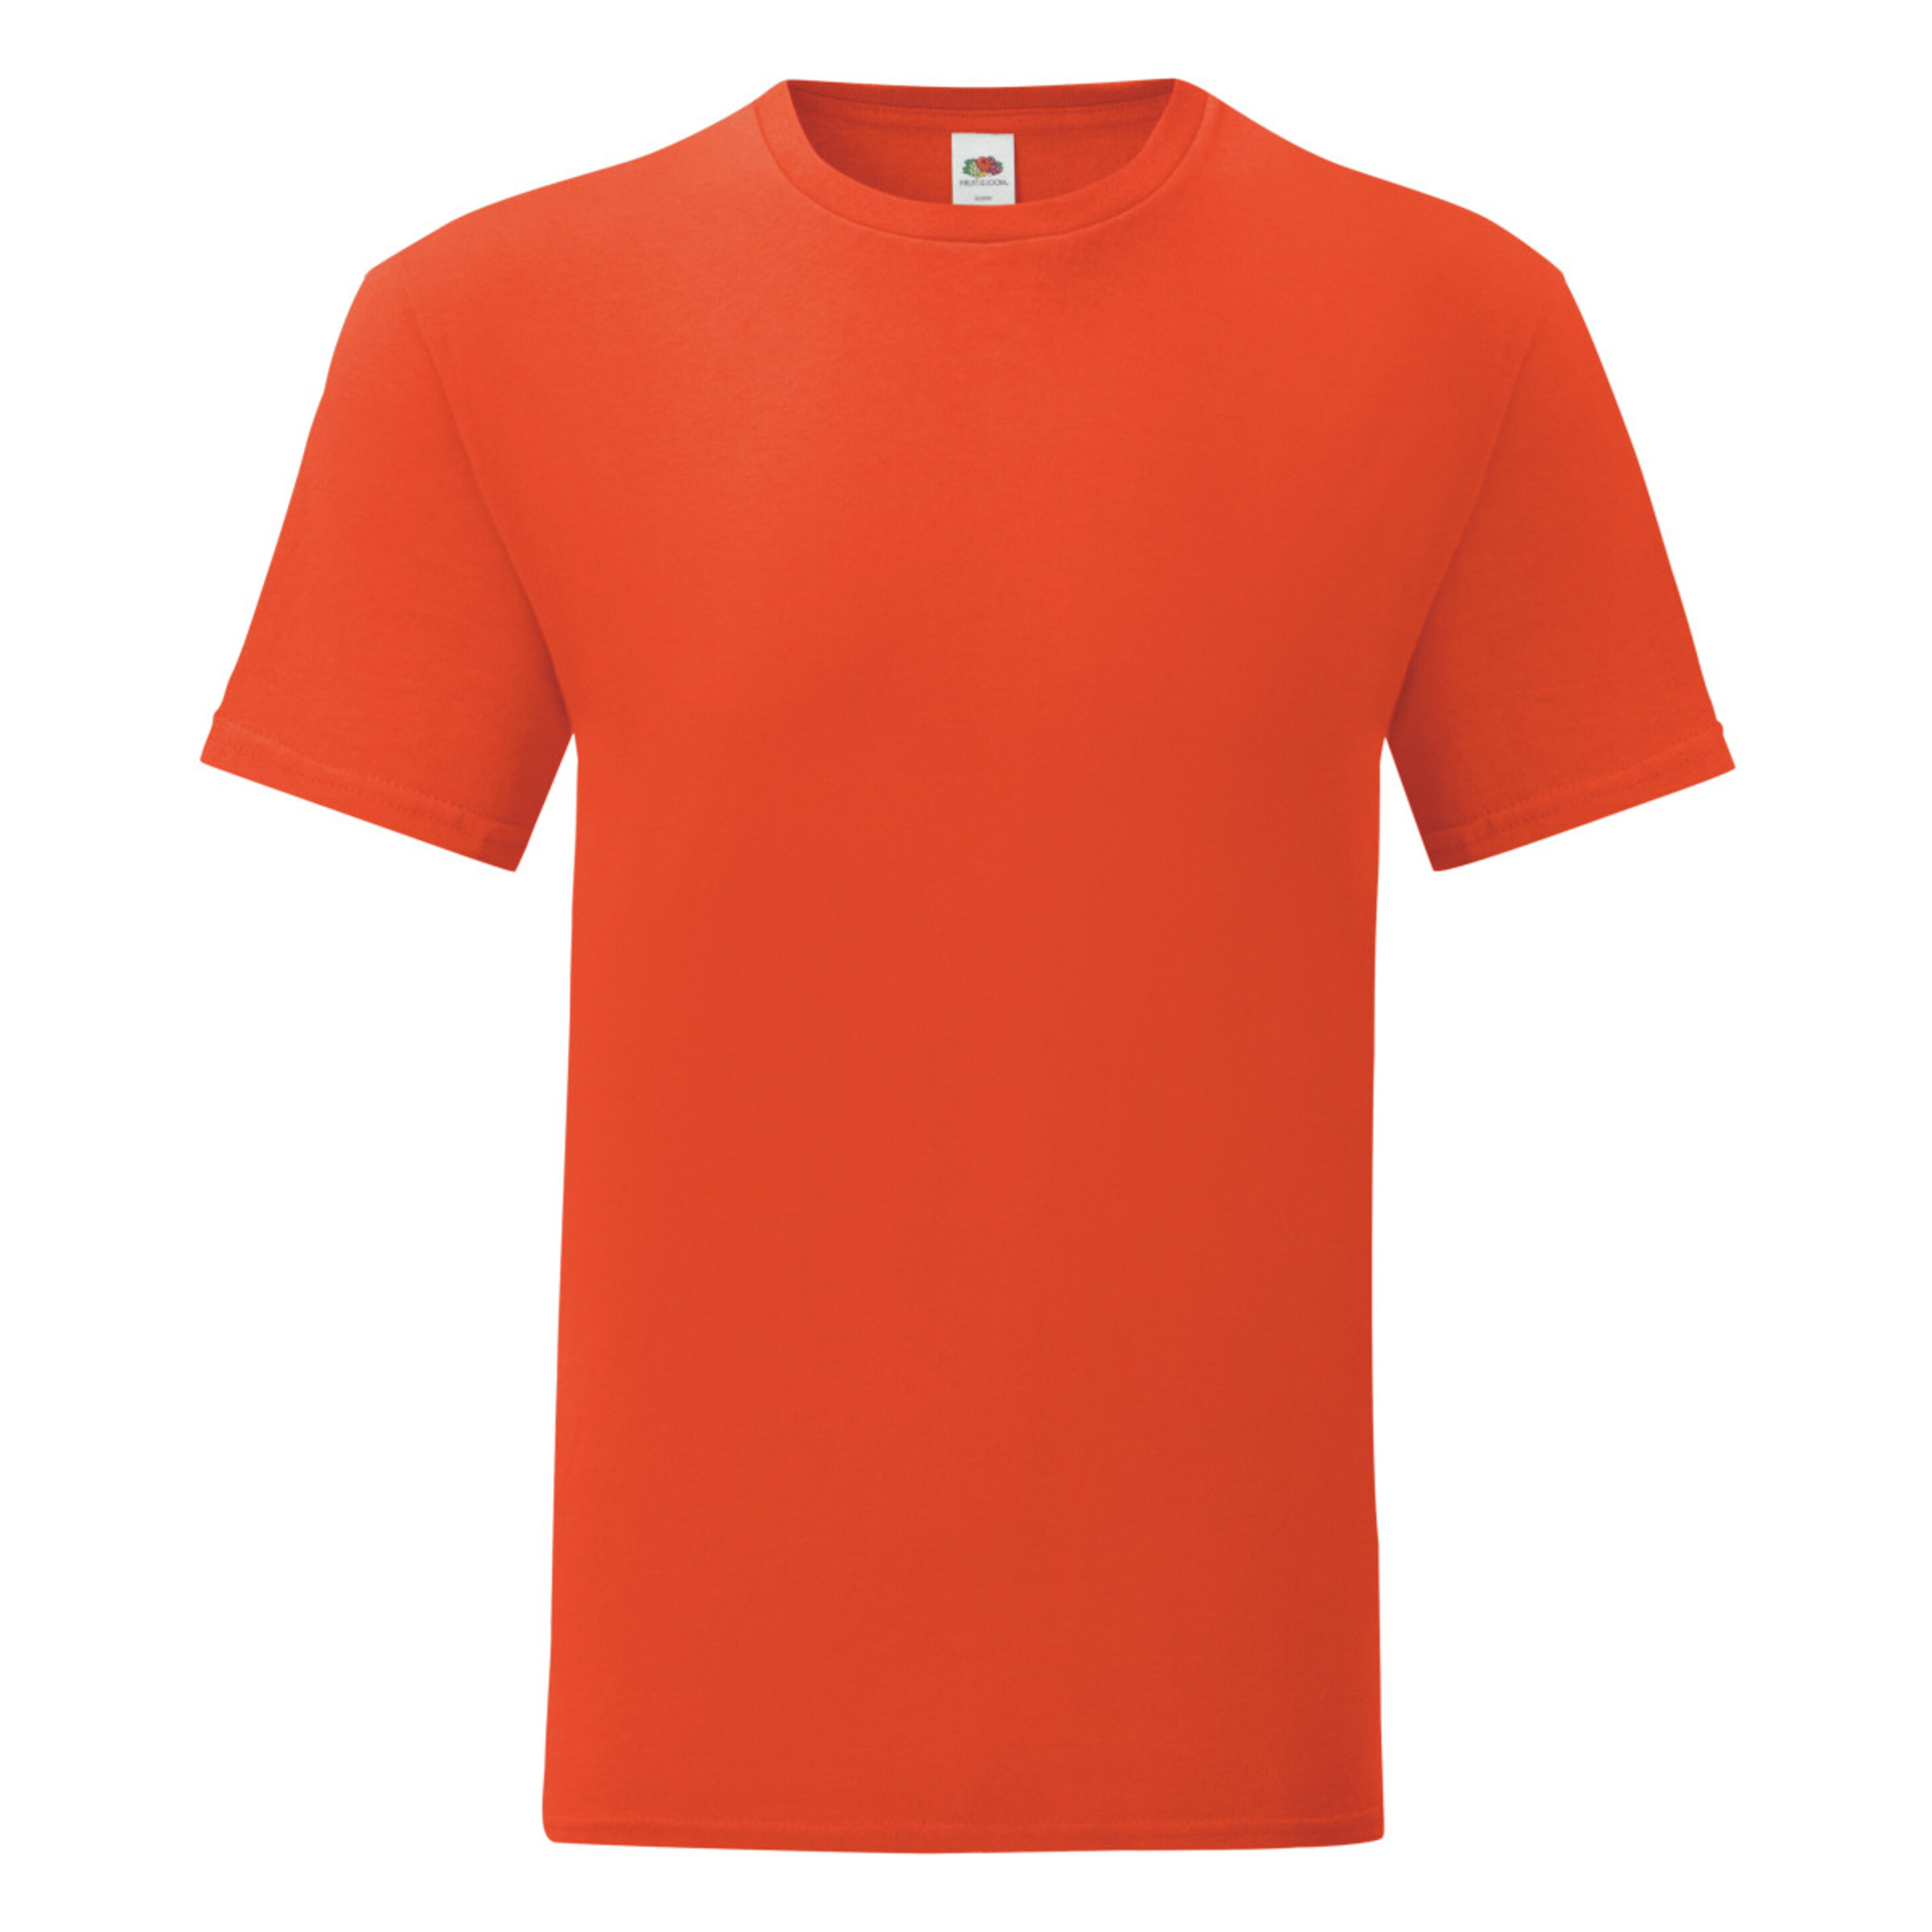 Camiseta Emblemática De La Marca Caballero Fruit Of The Loom Iconic 150 - naranja - 